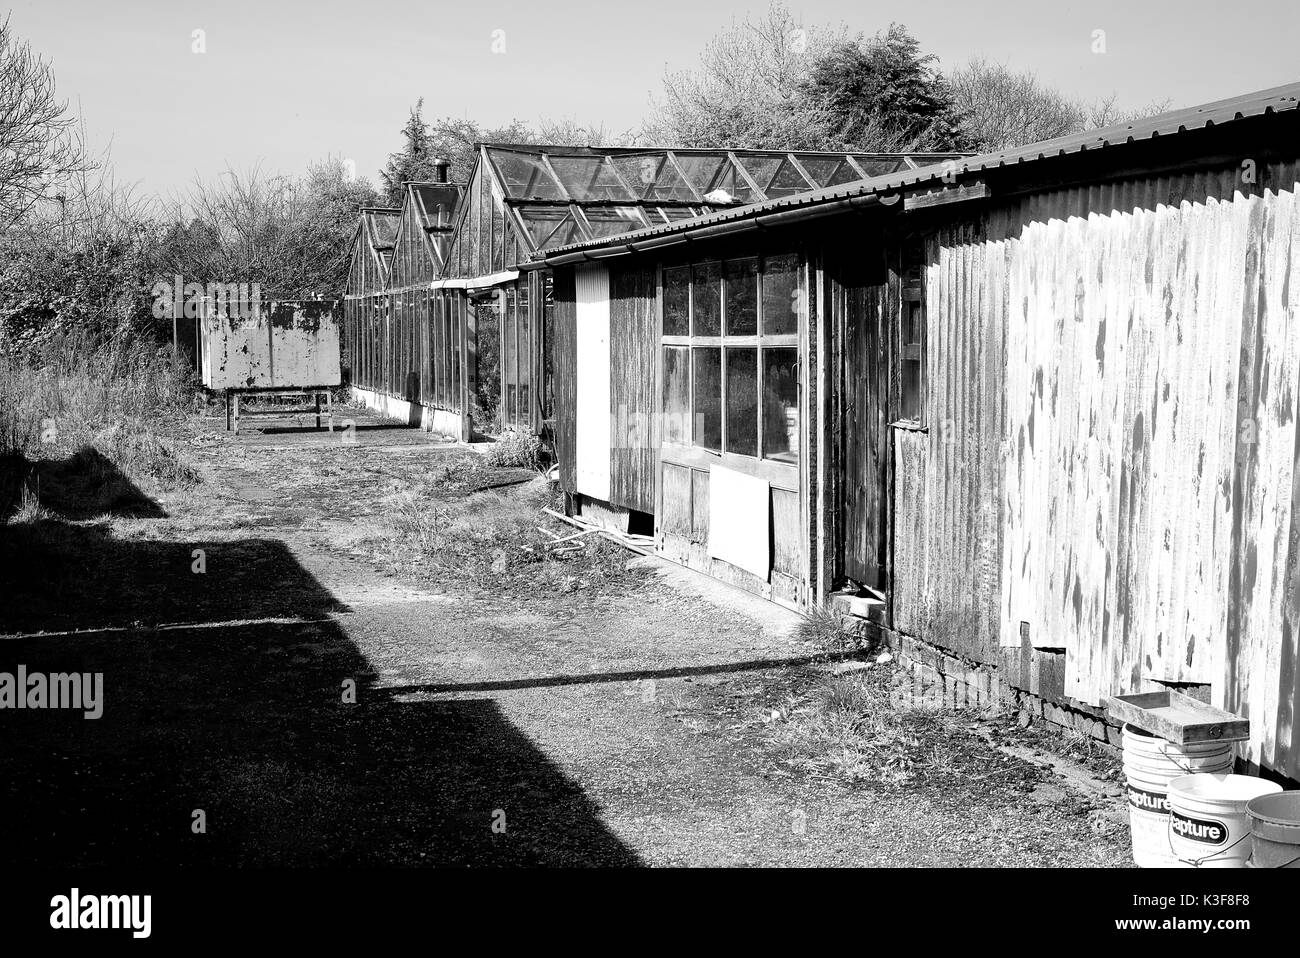 Rundown Kidby Nurseries, Little Clacton, Essex, in a state of decline awaiting development into a housing estate. Stock Photo